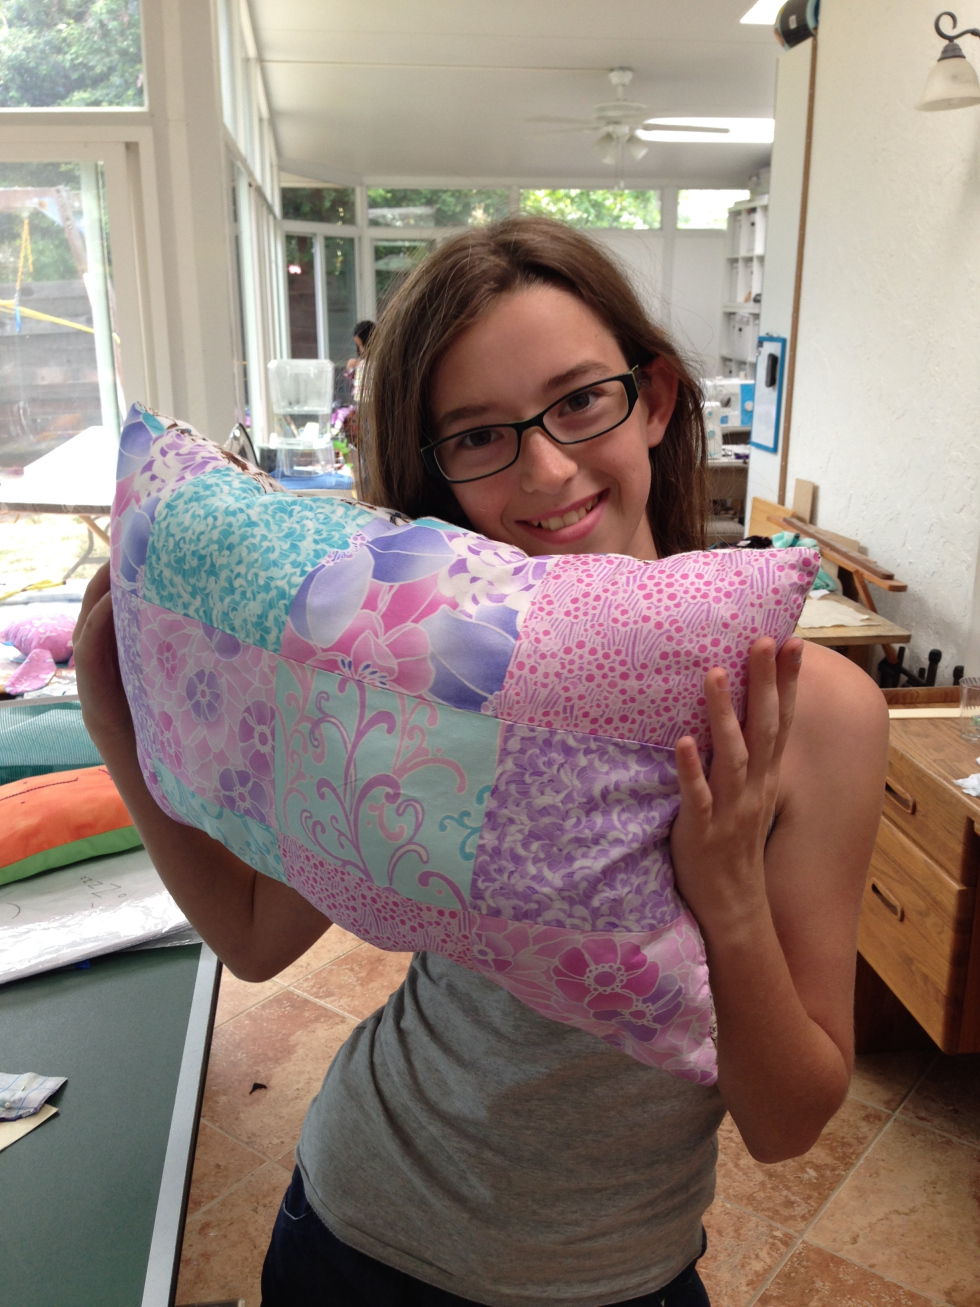  7th grader patchwork pillow 